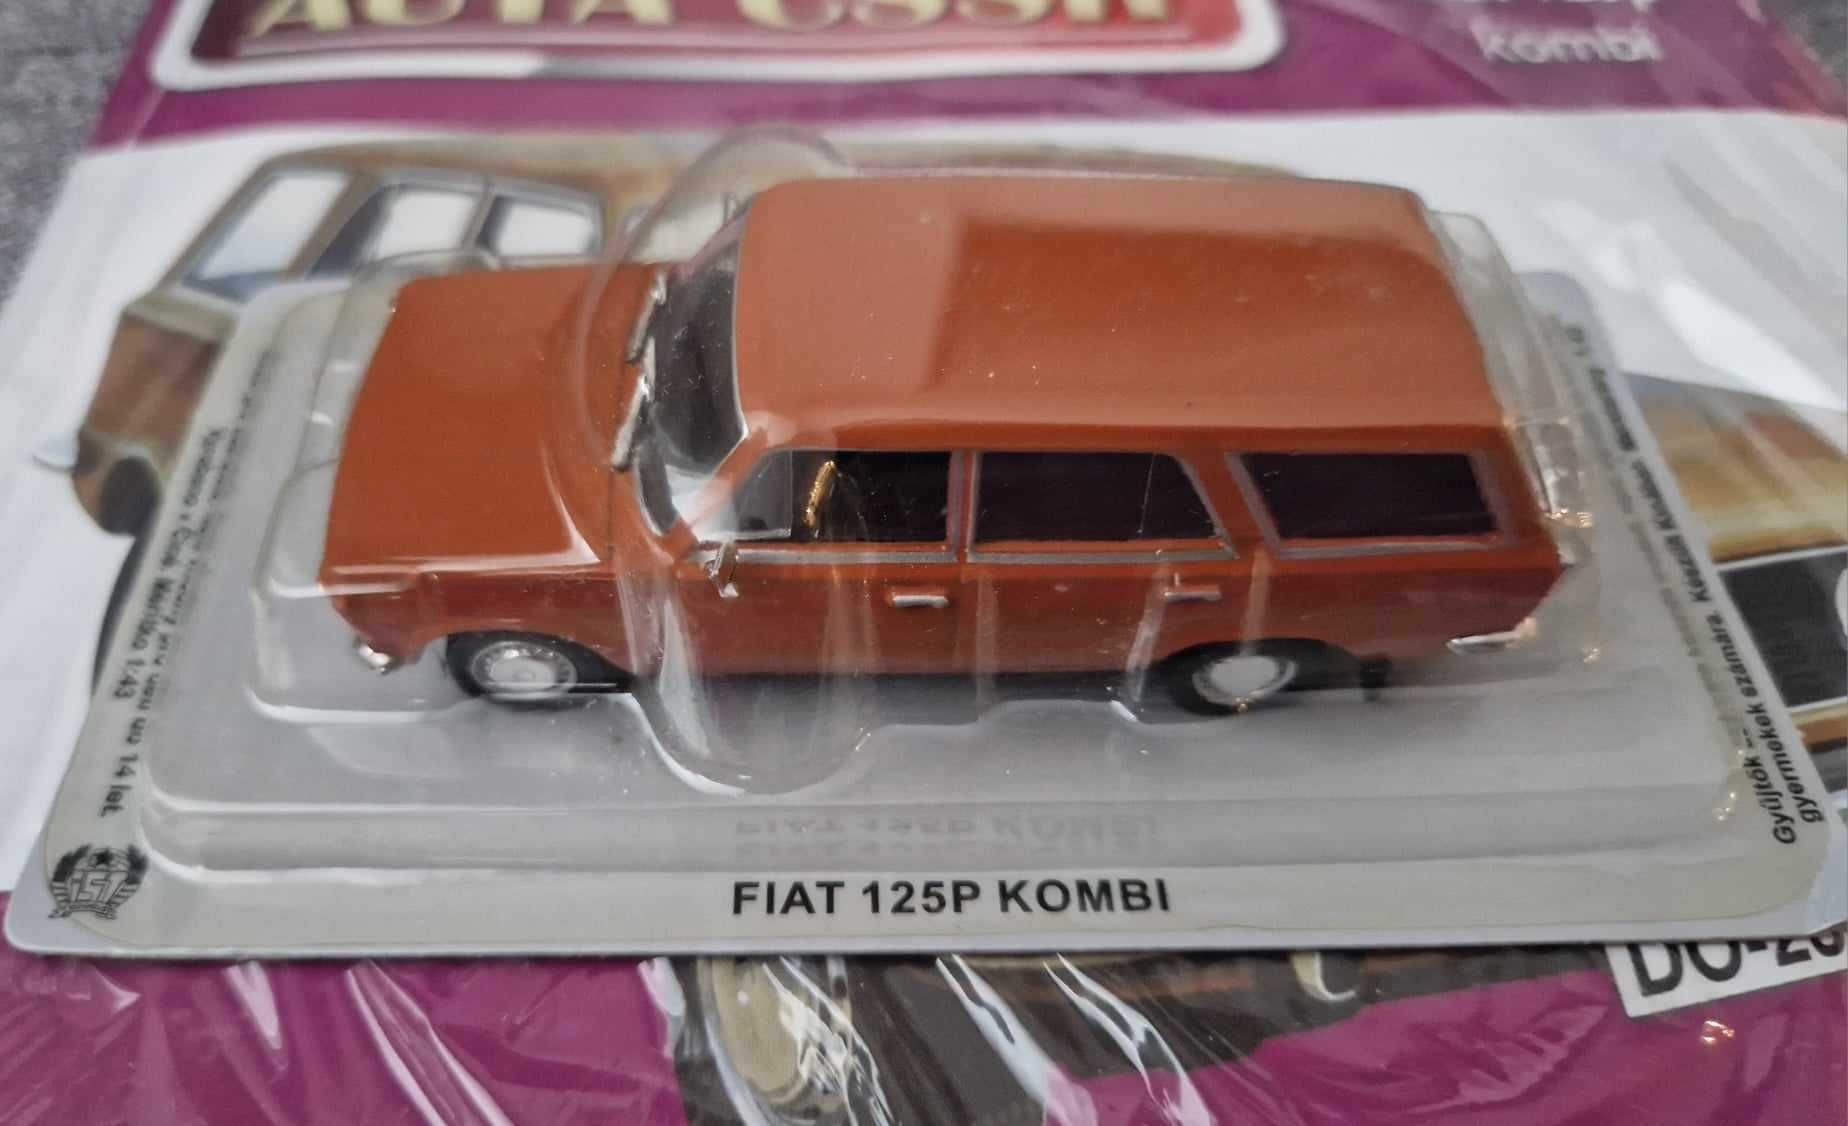 Model Fiat 125p kombi, Kultowe auta PRL skala 1:43